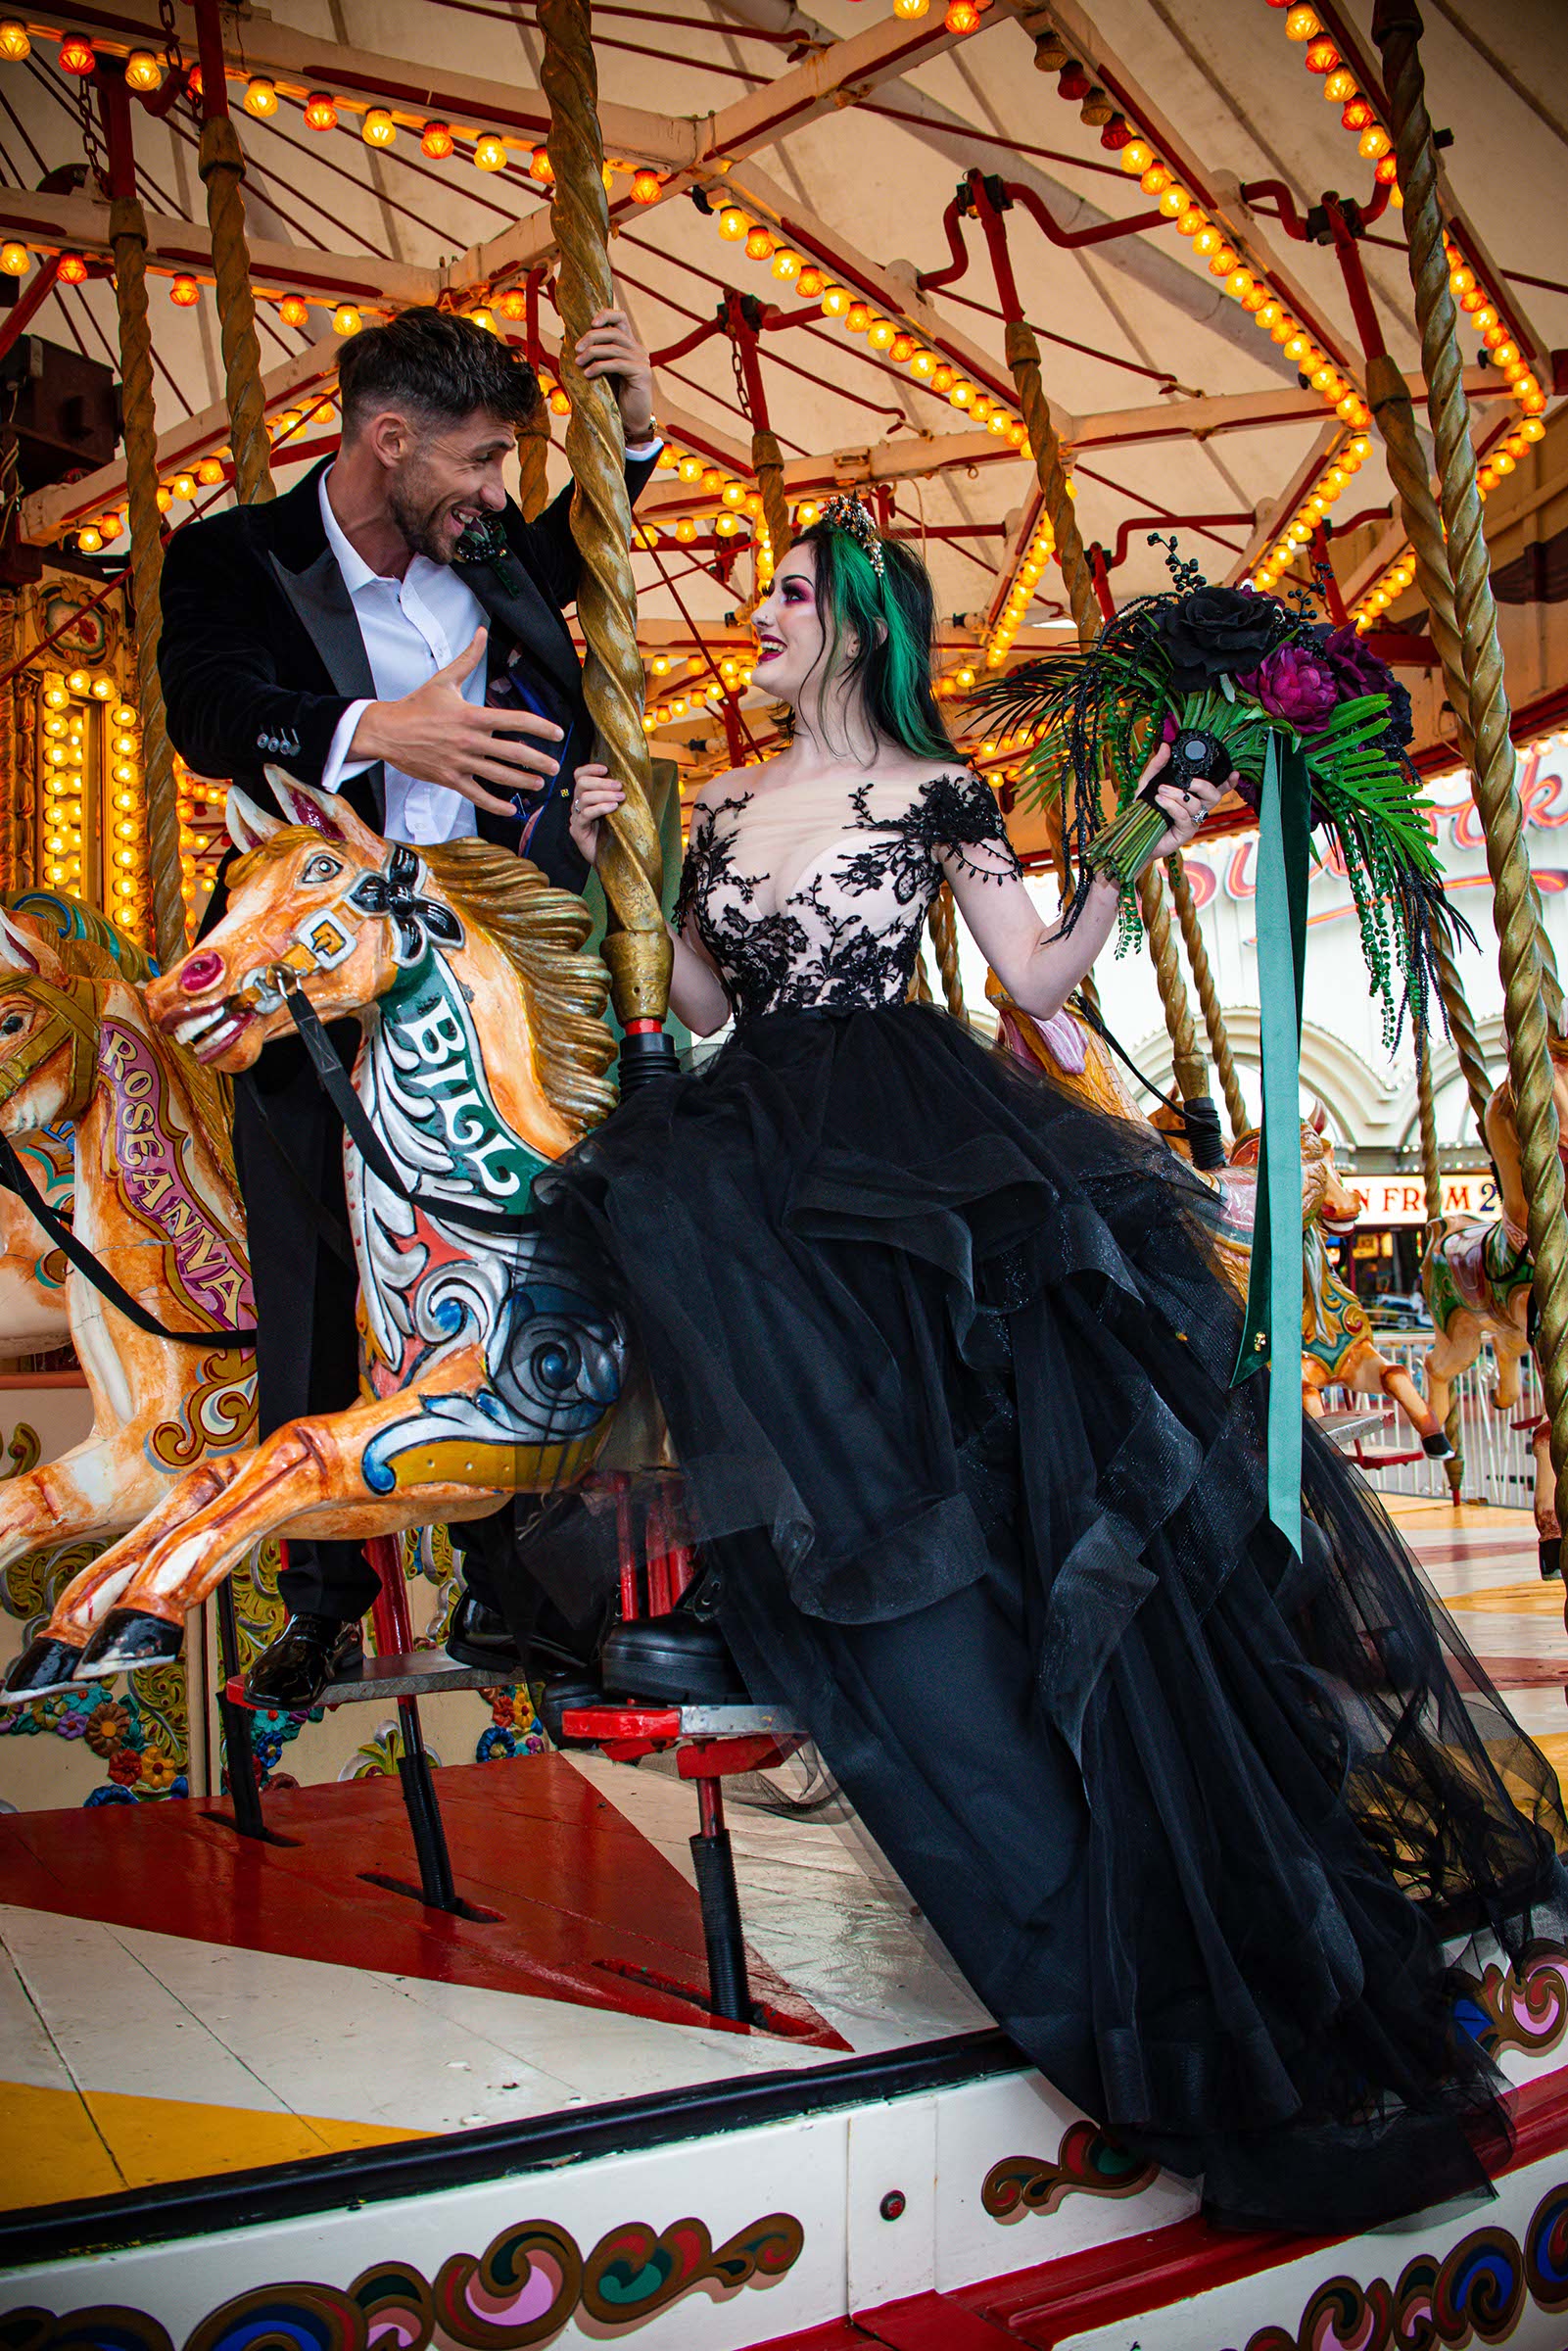 alternative luxe wedding - slytherin wedding - gothic wedding - alternative wedding - fun wedding ideas - bride and groom on carousel